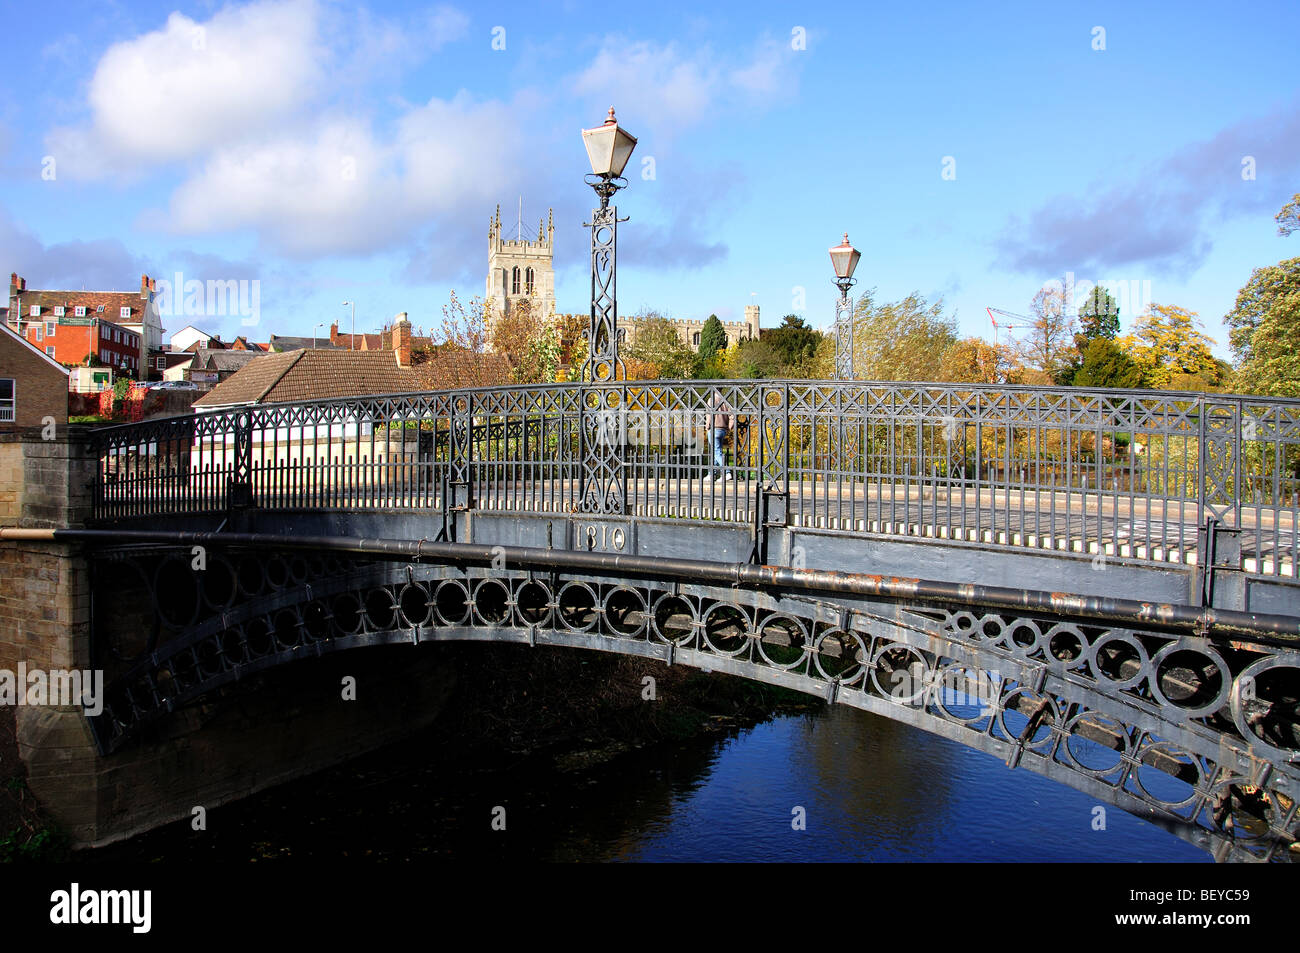 Tickford Brücke über den Fluss Ouzel, Newport Pagnell, Buckinghamshire, England, Vereinigtes Königreich Stockfoto